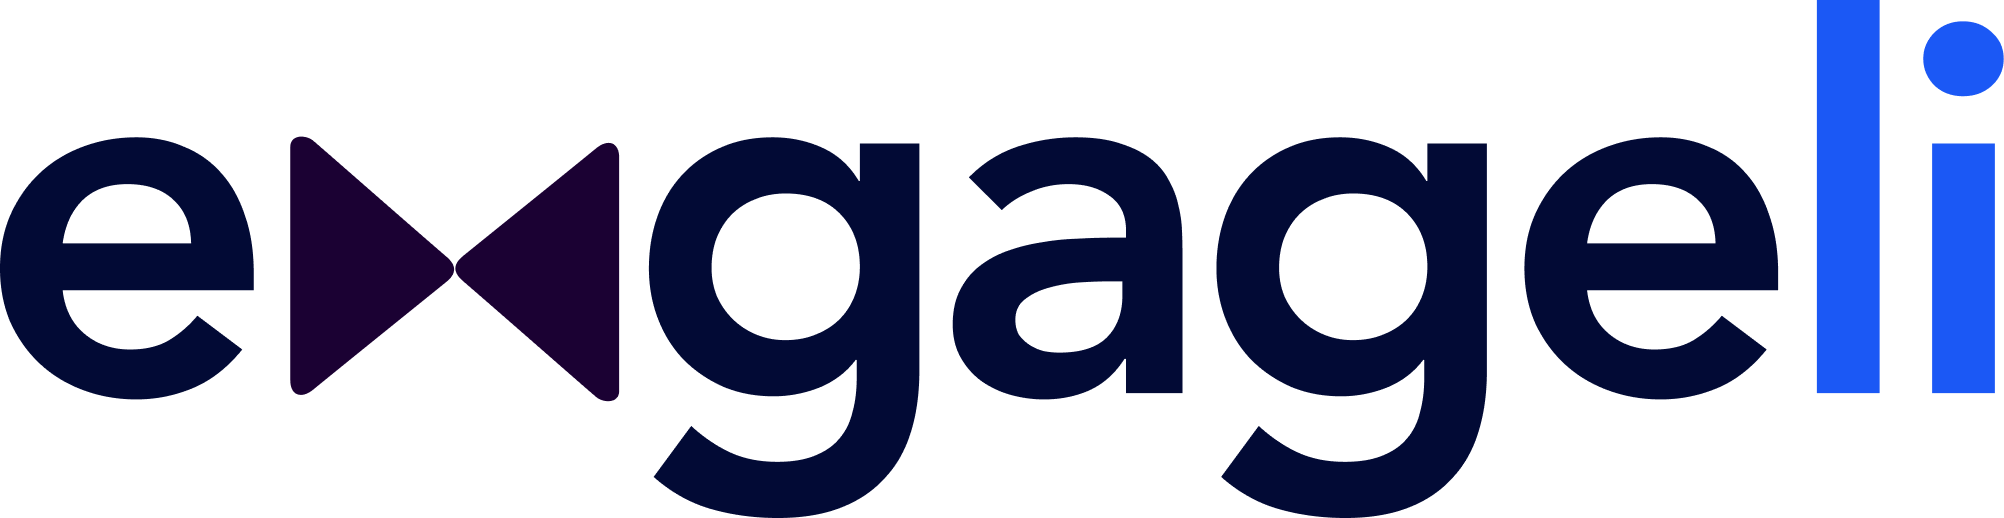 Engageli_Logo_Final.png